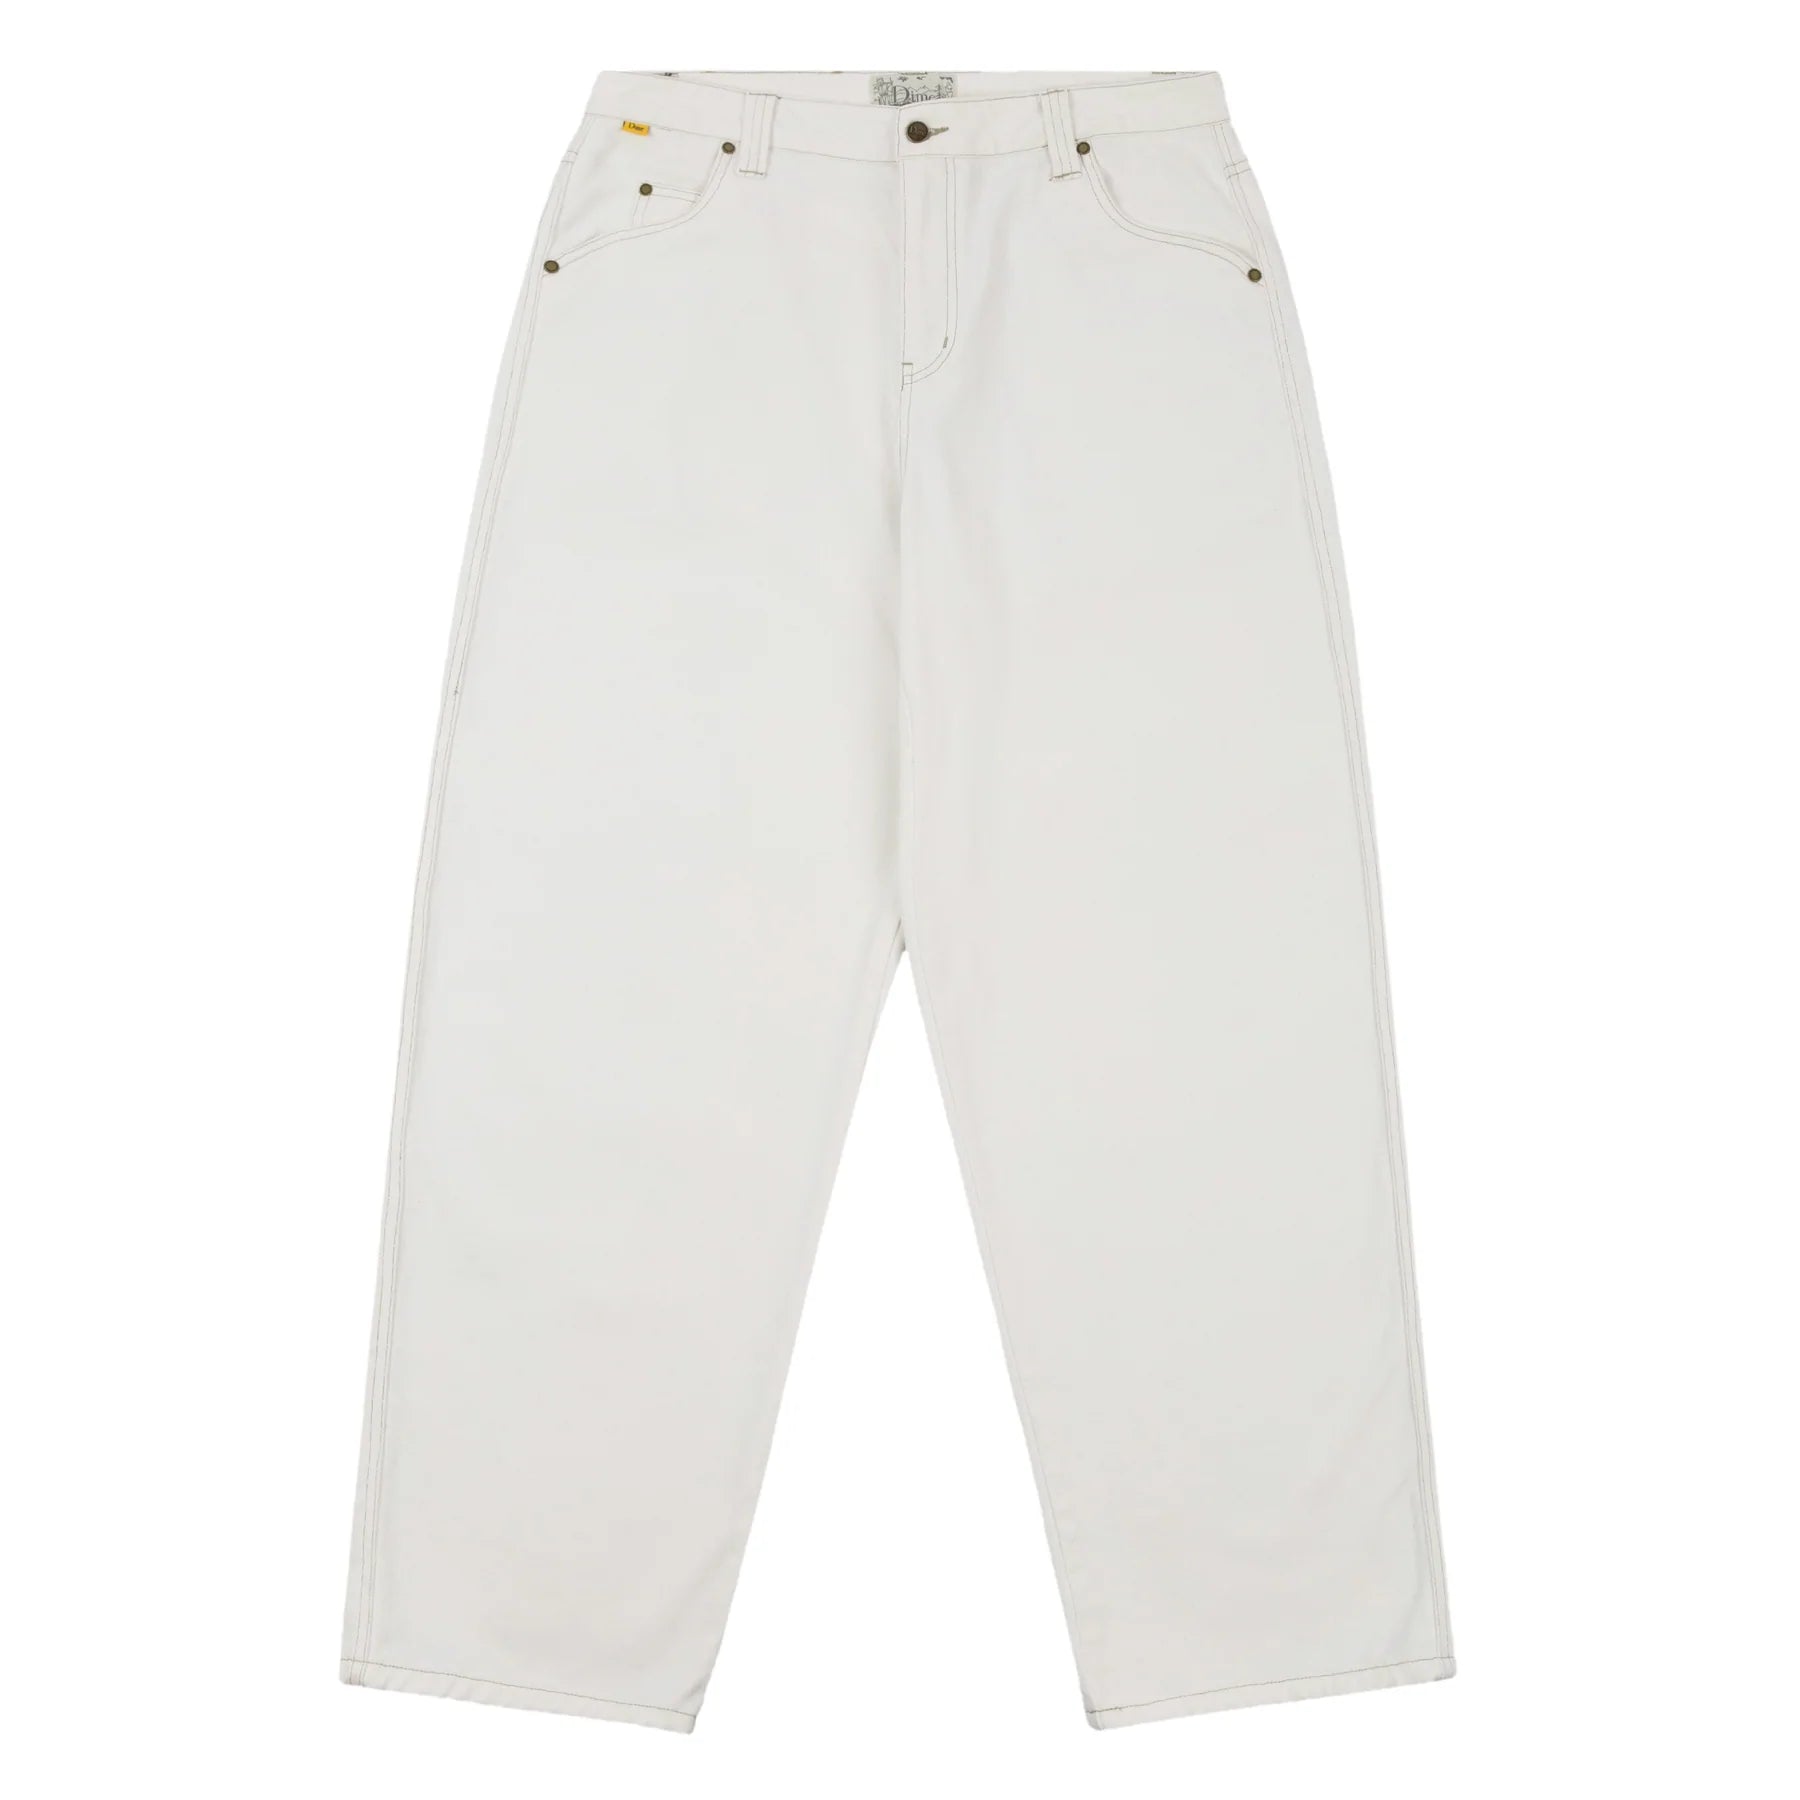 White Baggy Street High Waist Pants SD00691